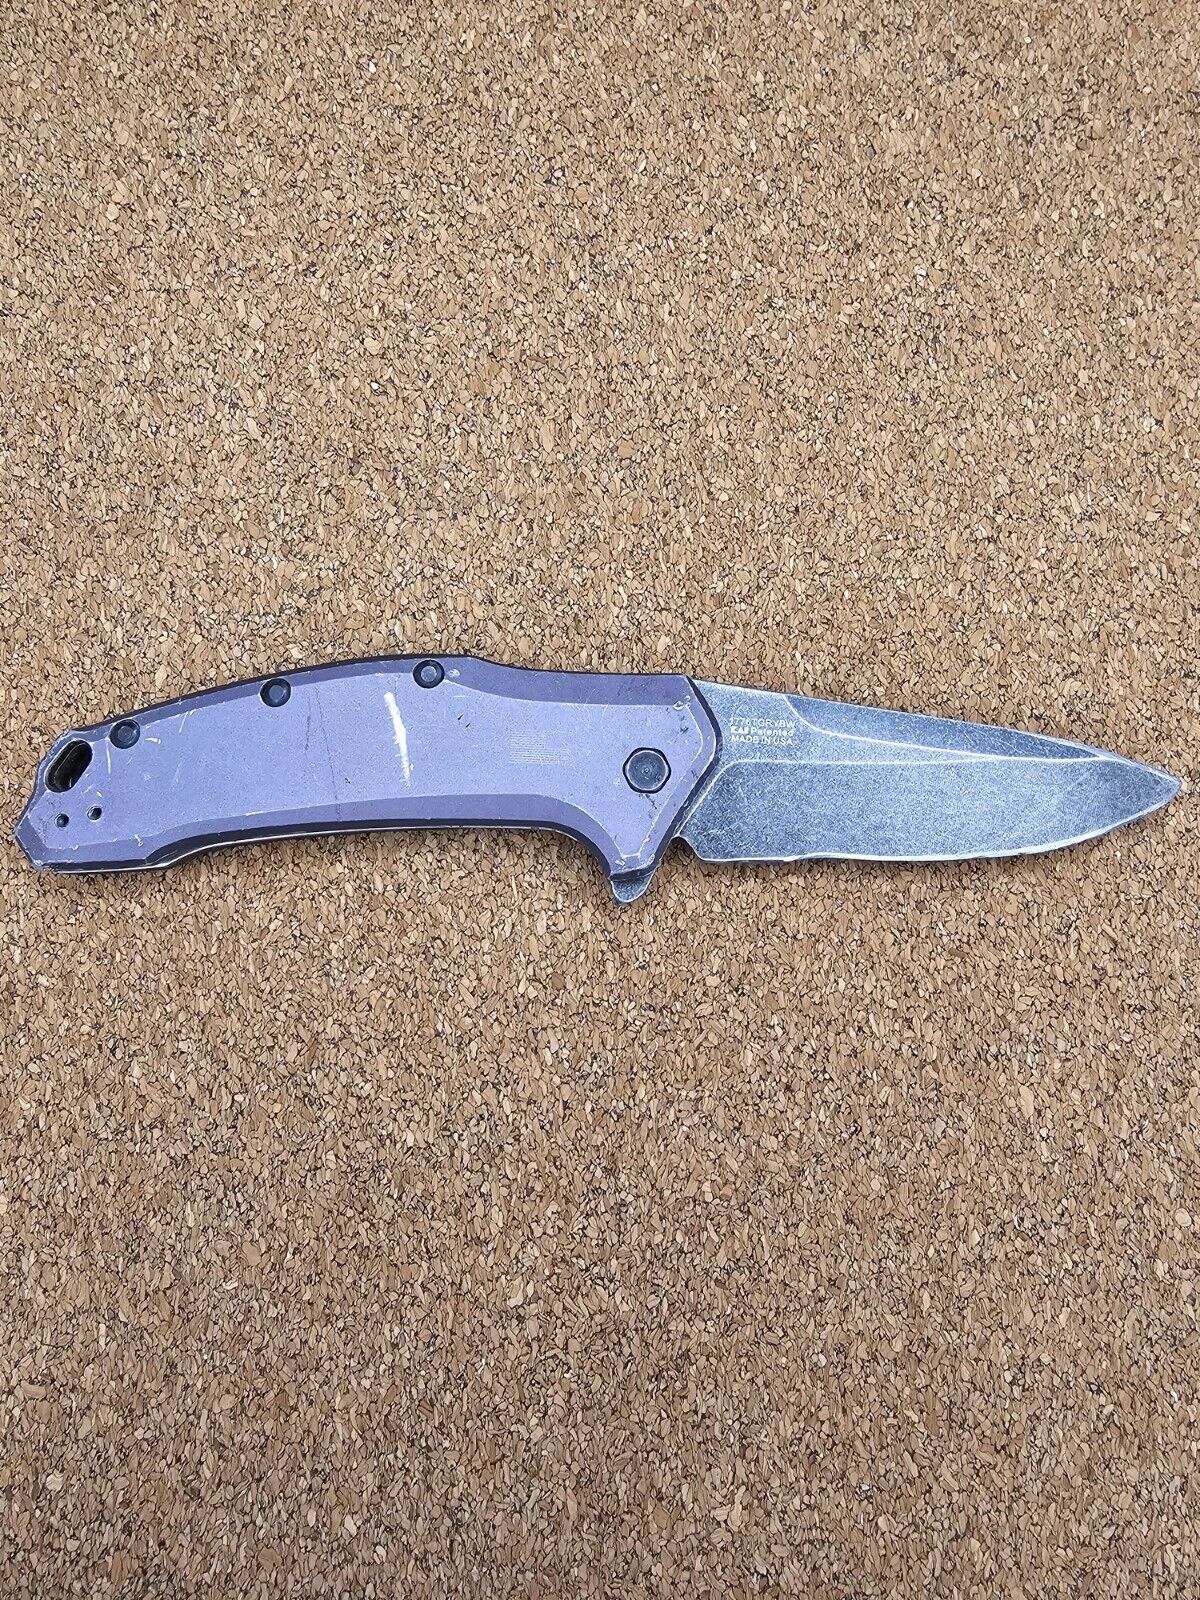 Kershaw Link 1776 / Pocket Knife / USA Made / 1776GRYBW - Gray / Flipper